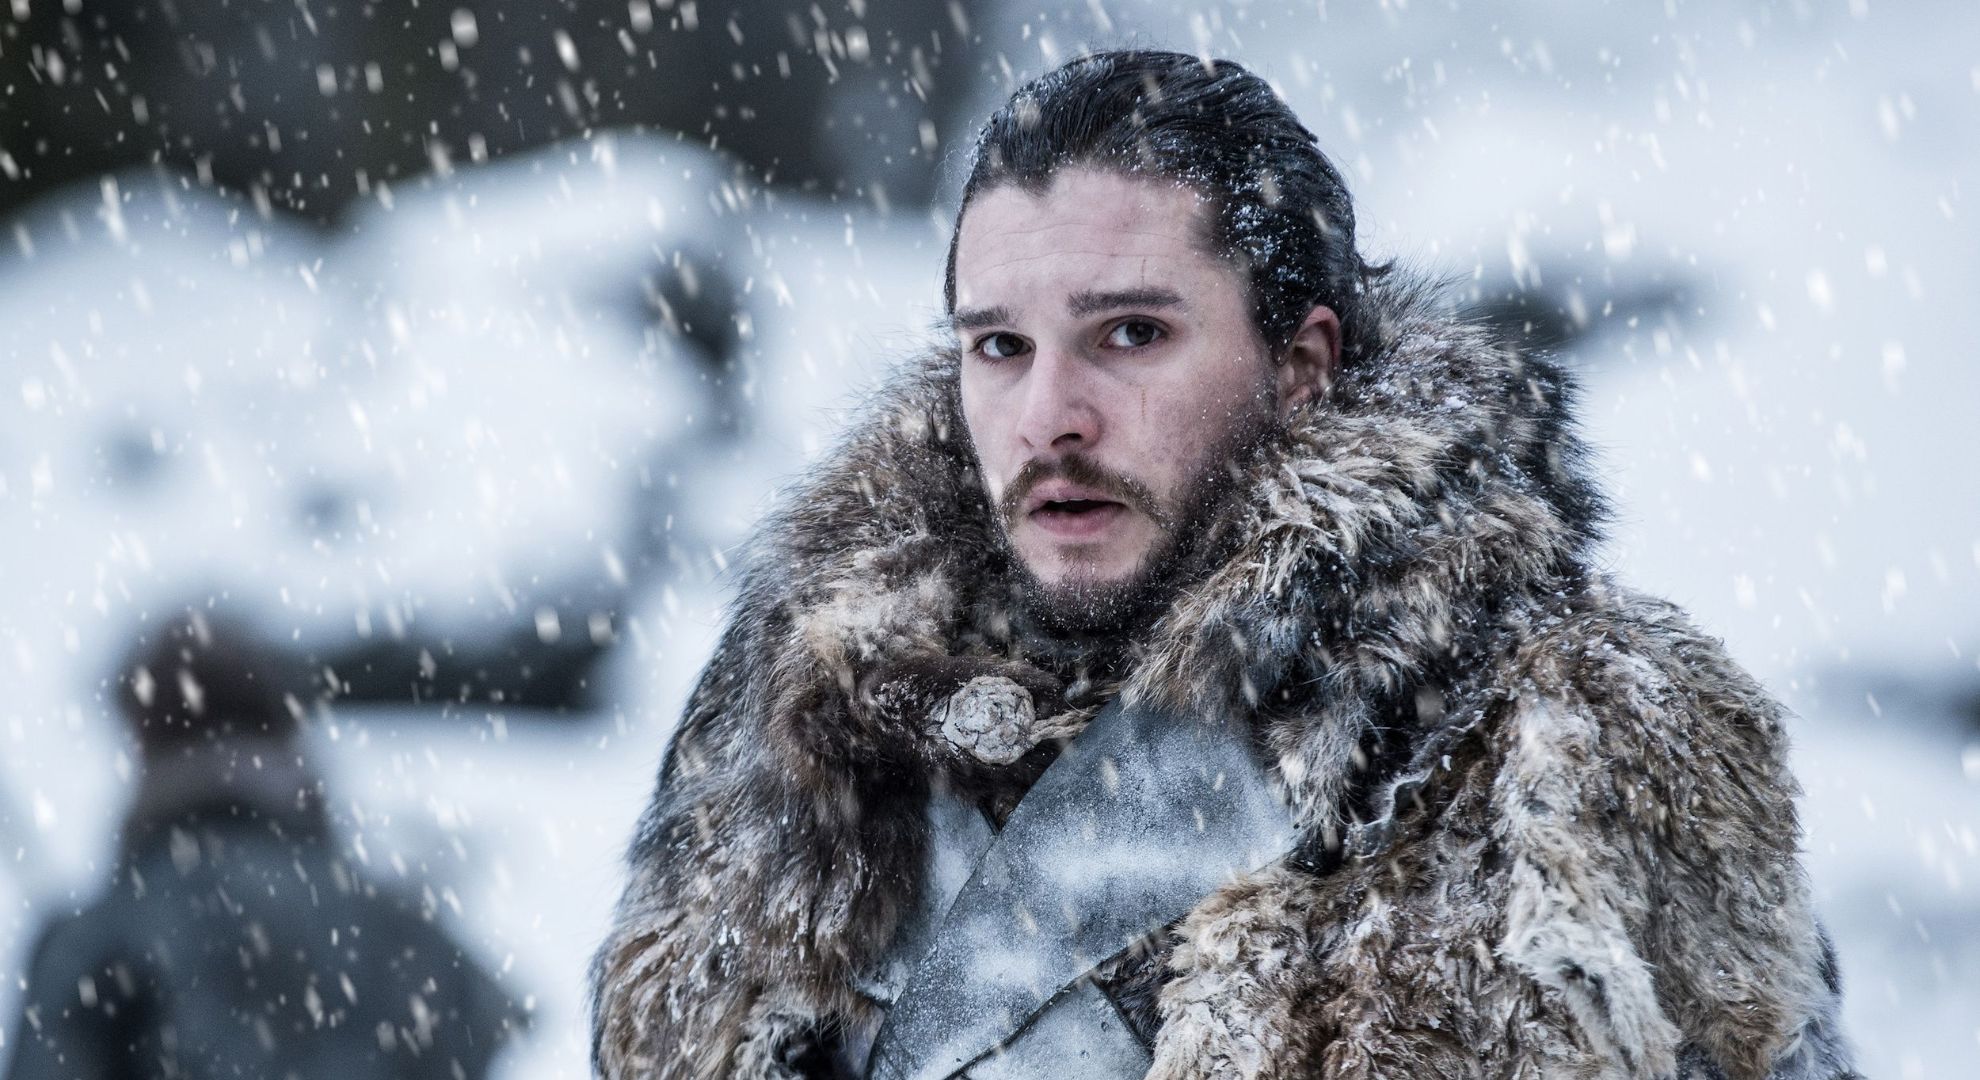 Kit Harington as Jon Snow in Game of Thrones 